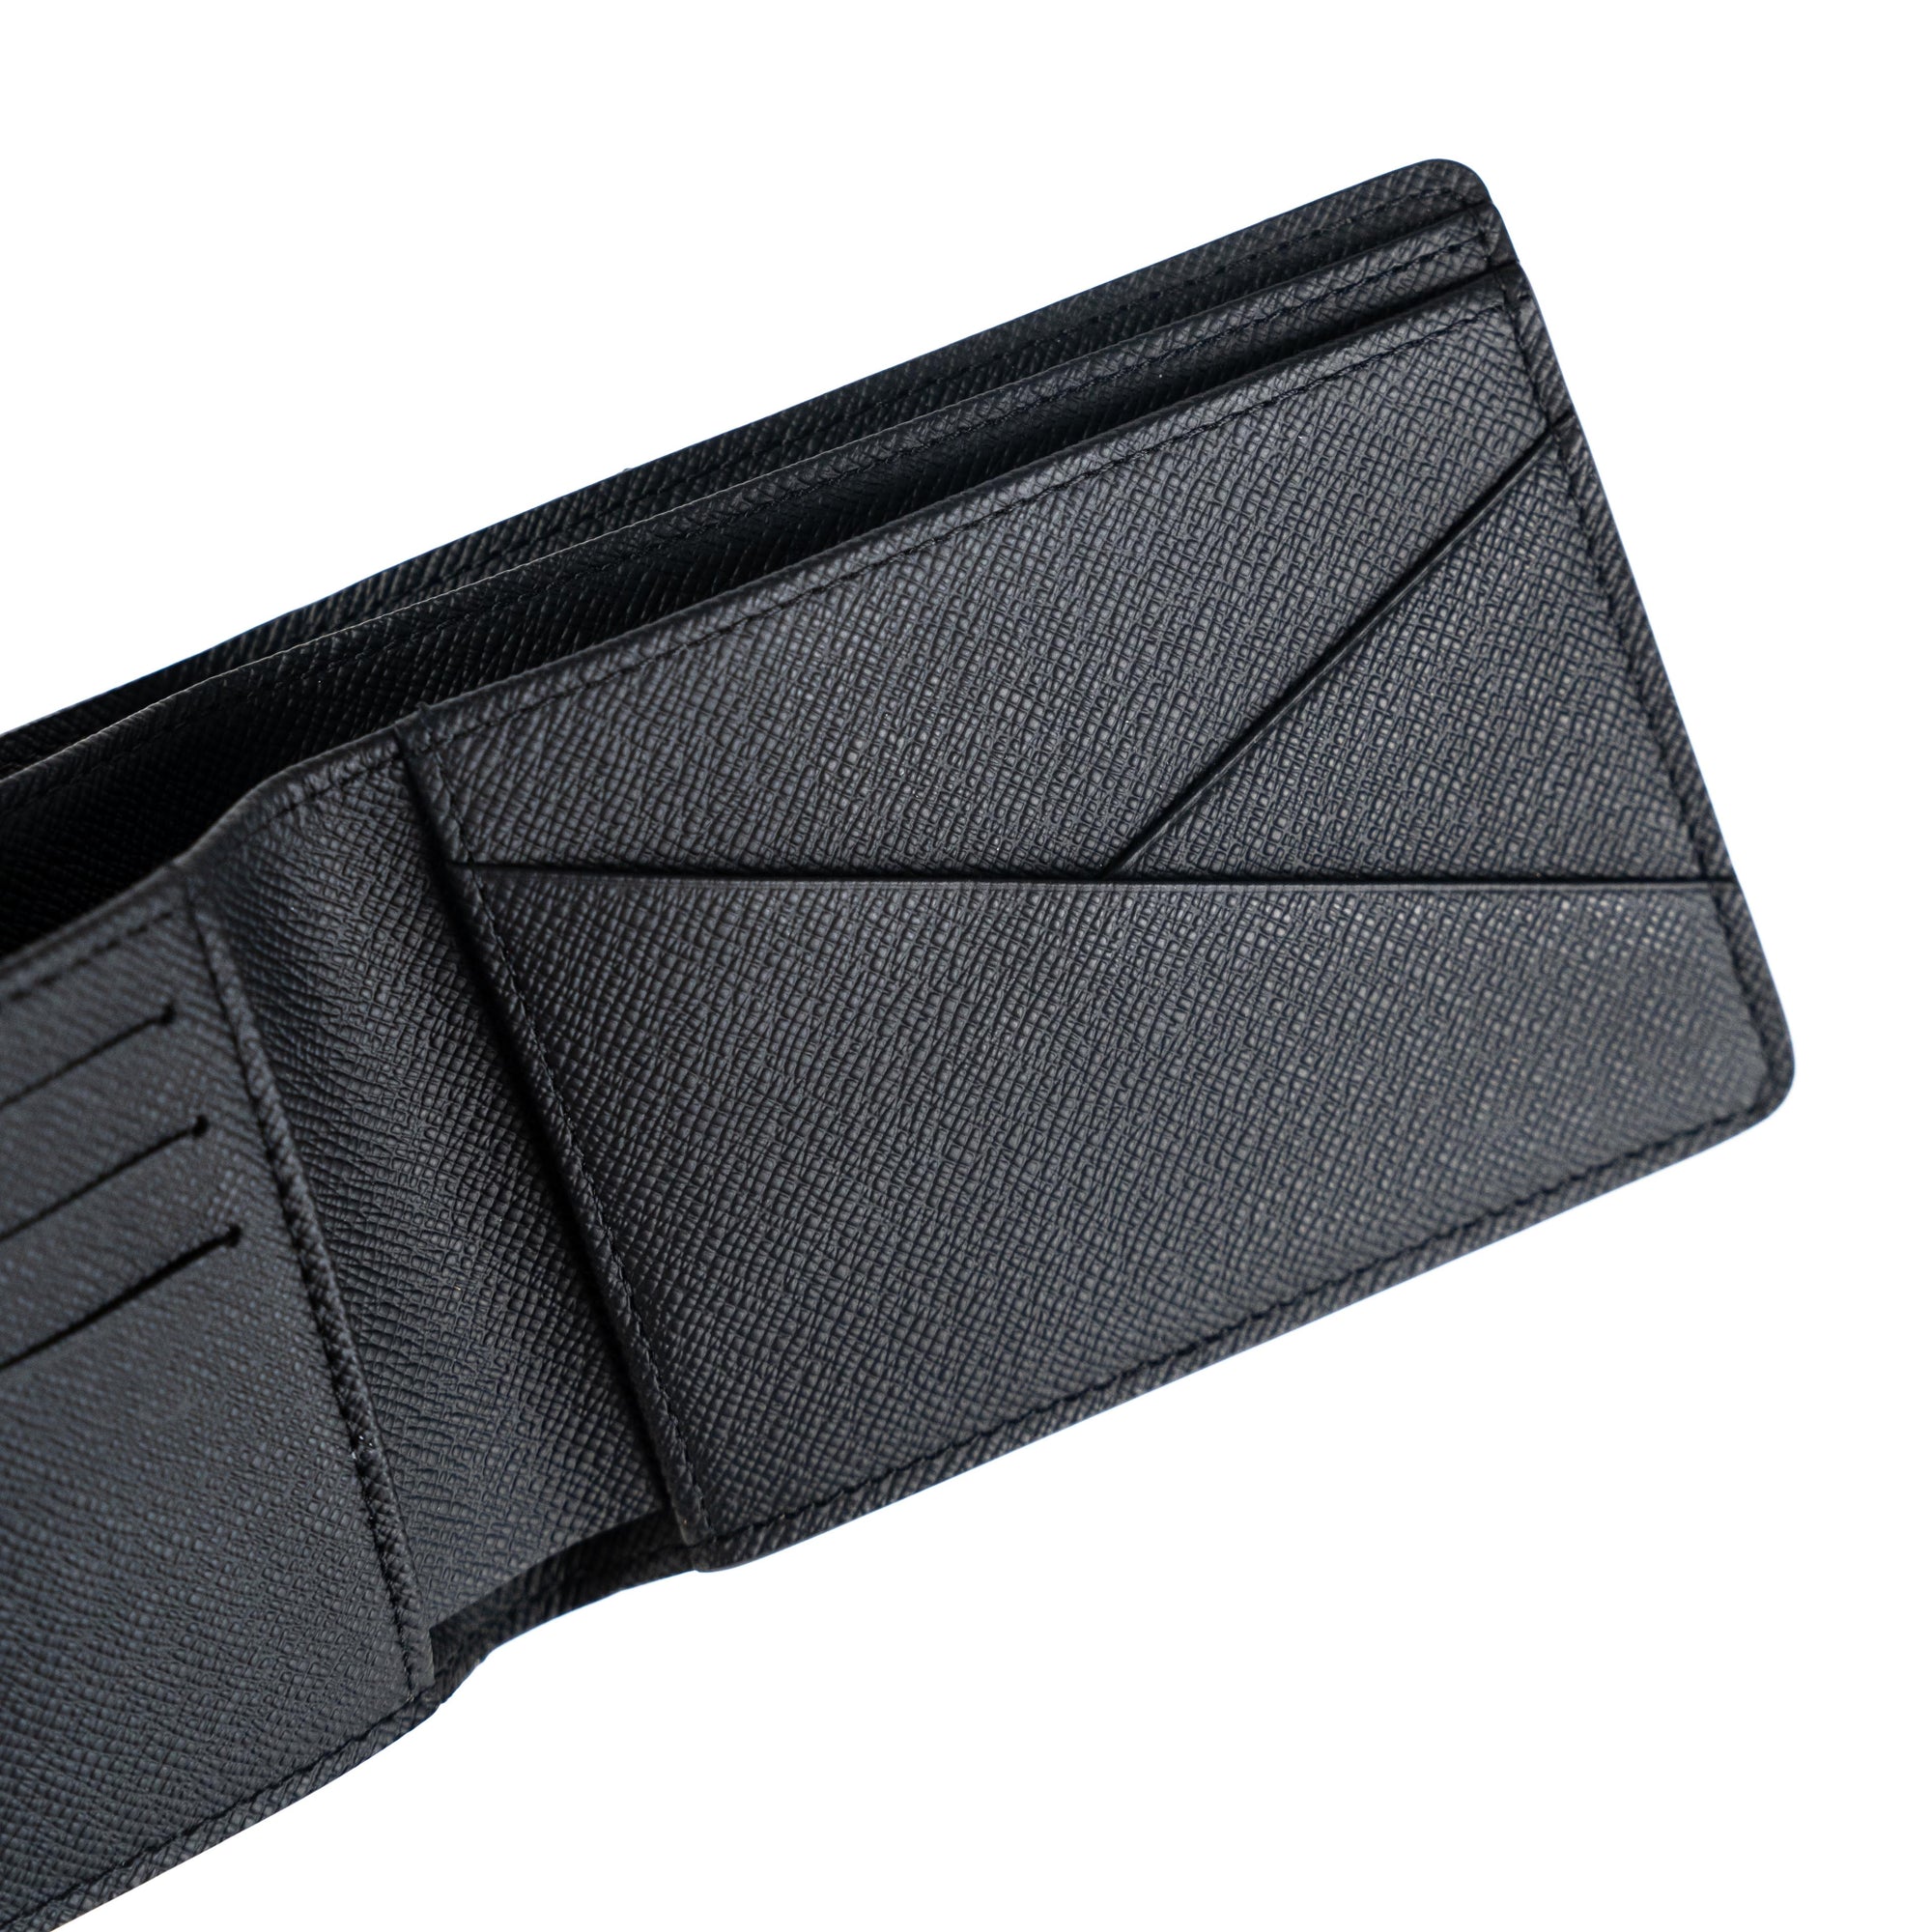 Slender Wallet Monogram Eclipse - Men - Small Leather Goods